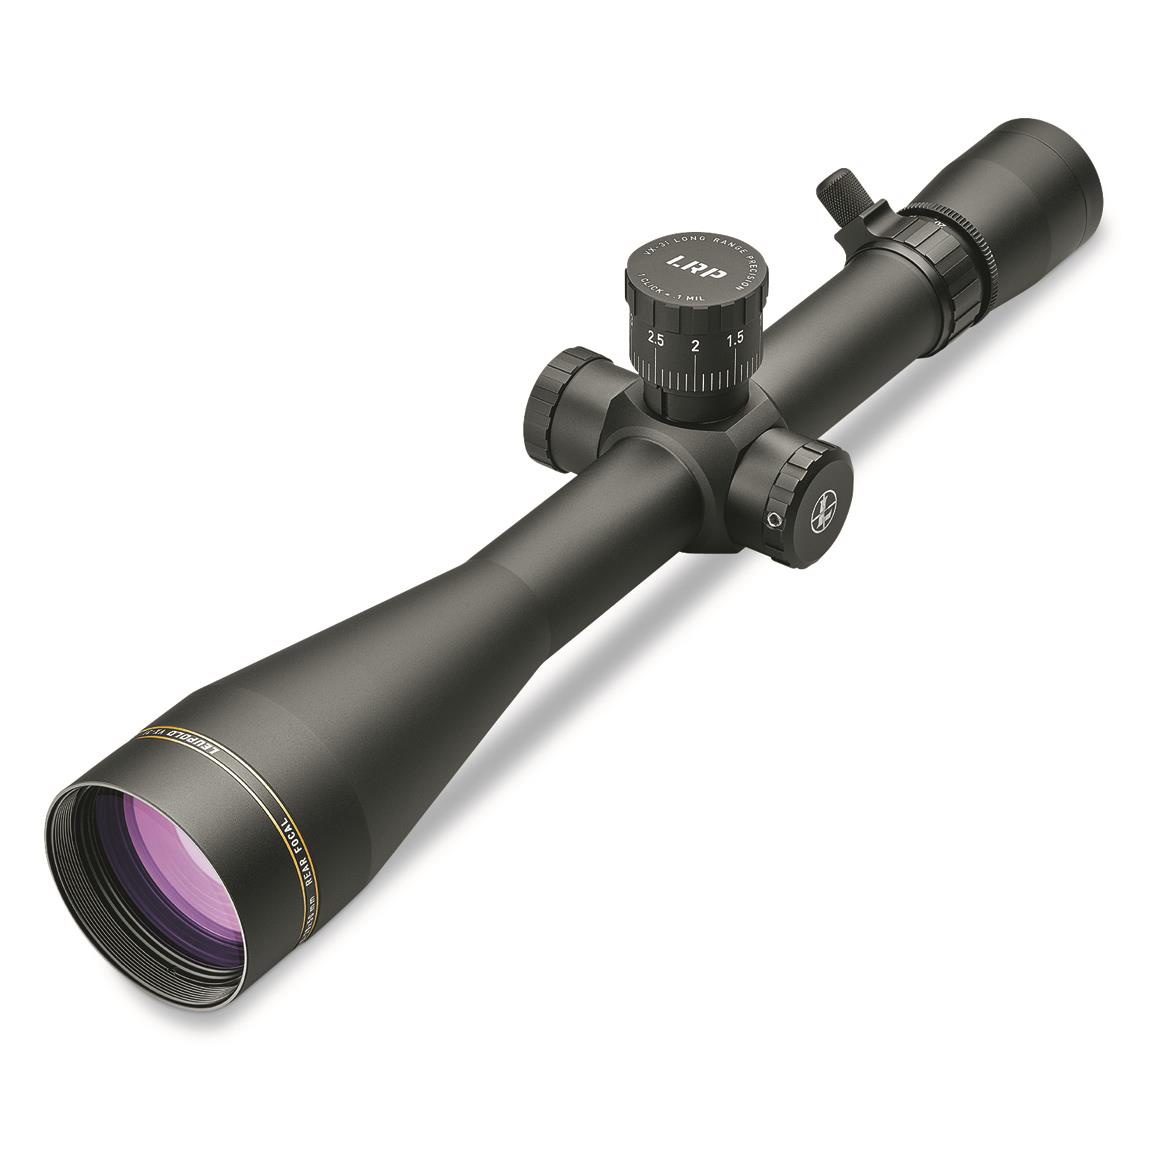 Leupold Riflescope Sport Optic AR-15 Military Hunting Black T-shirt Size S To 5X